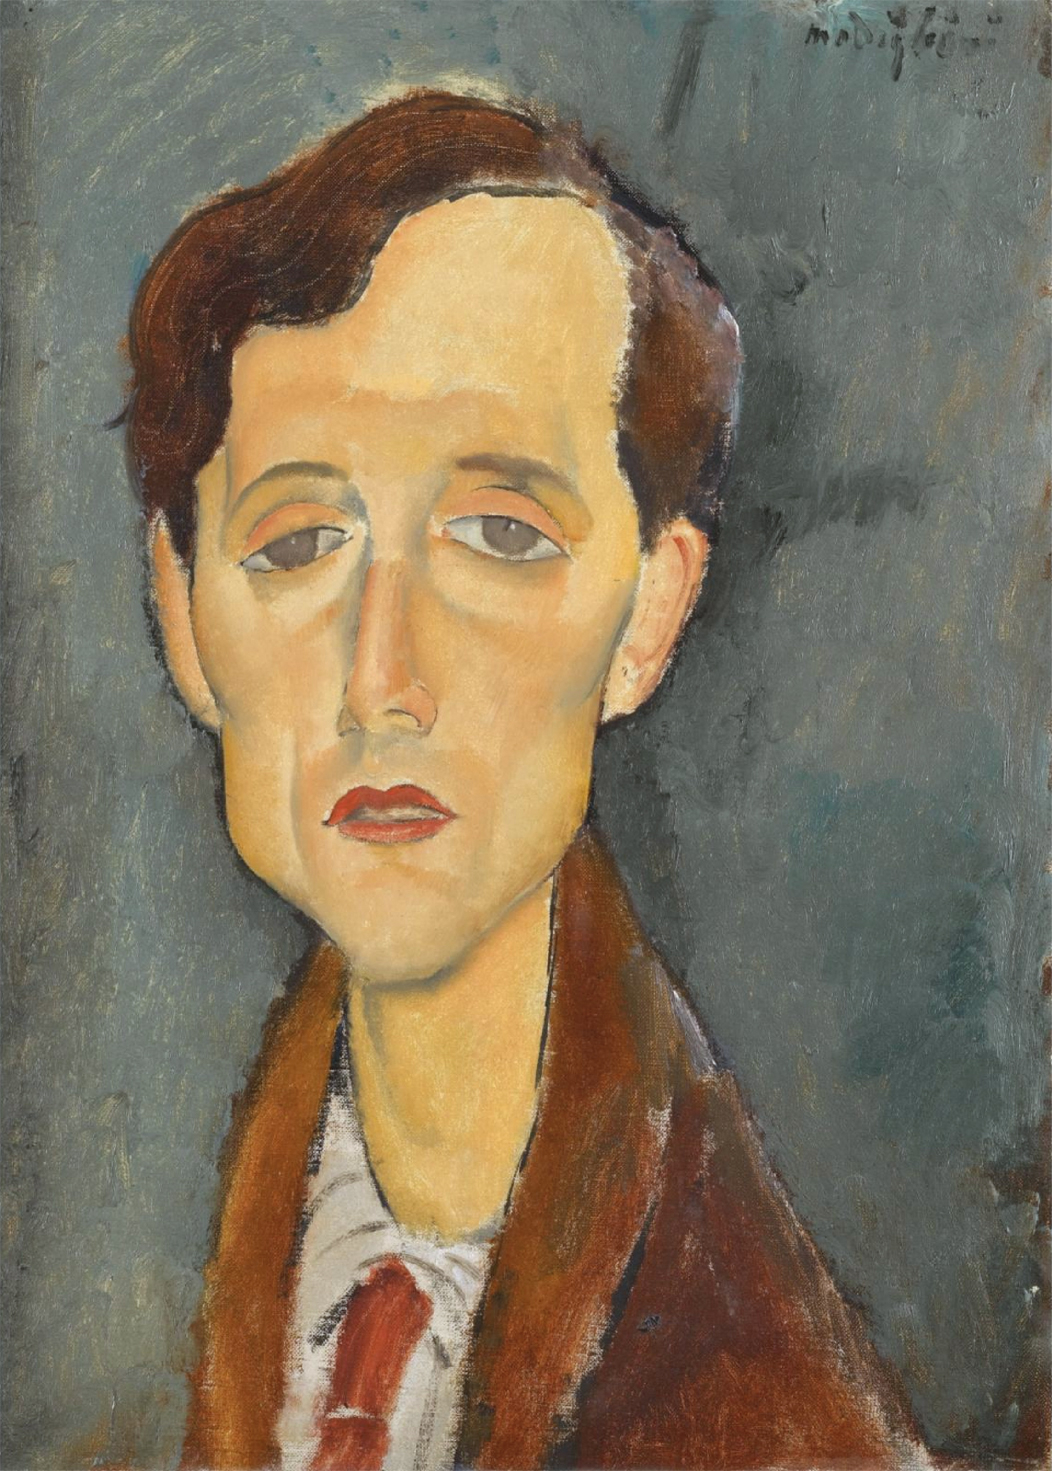 Frans Hellens by Amedeo Modigliani - 1919 - 46 x 34cm Private Sammlung